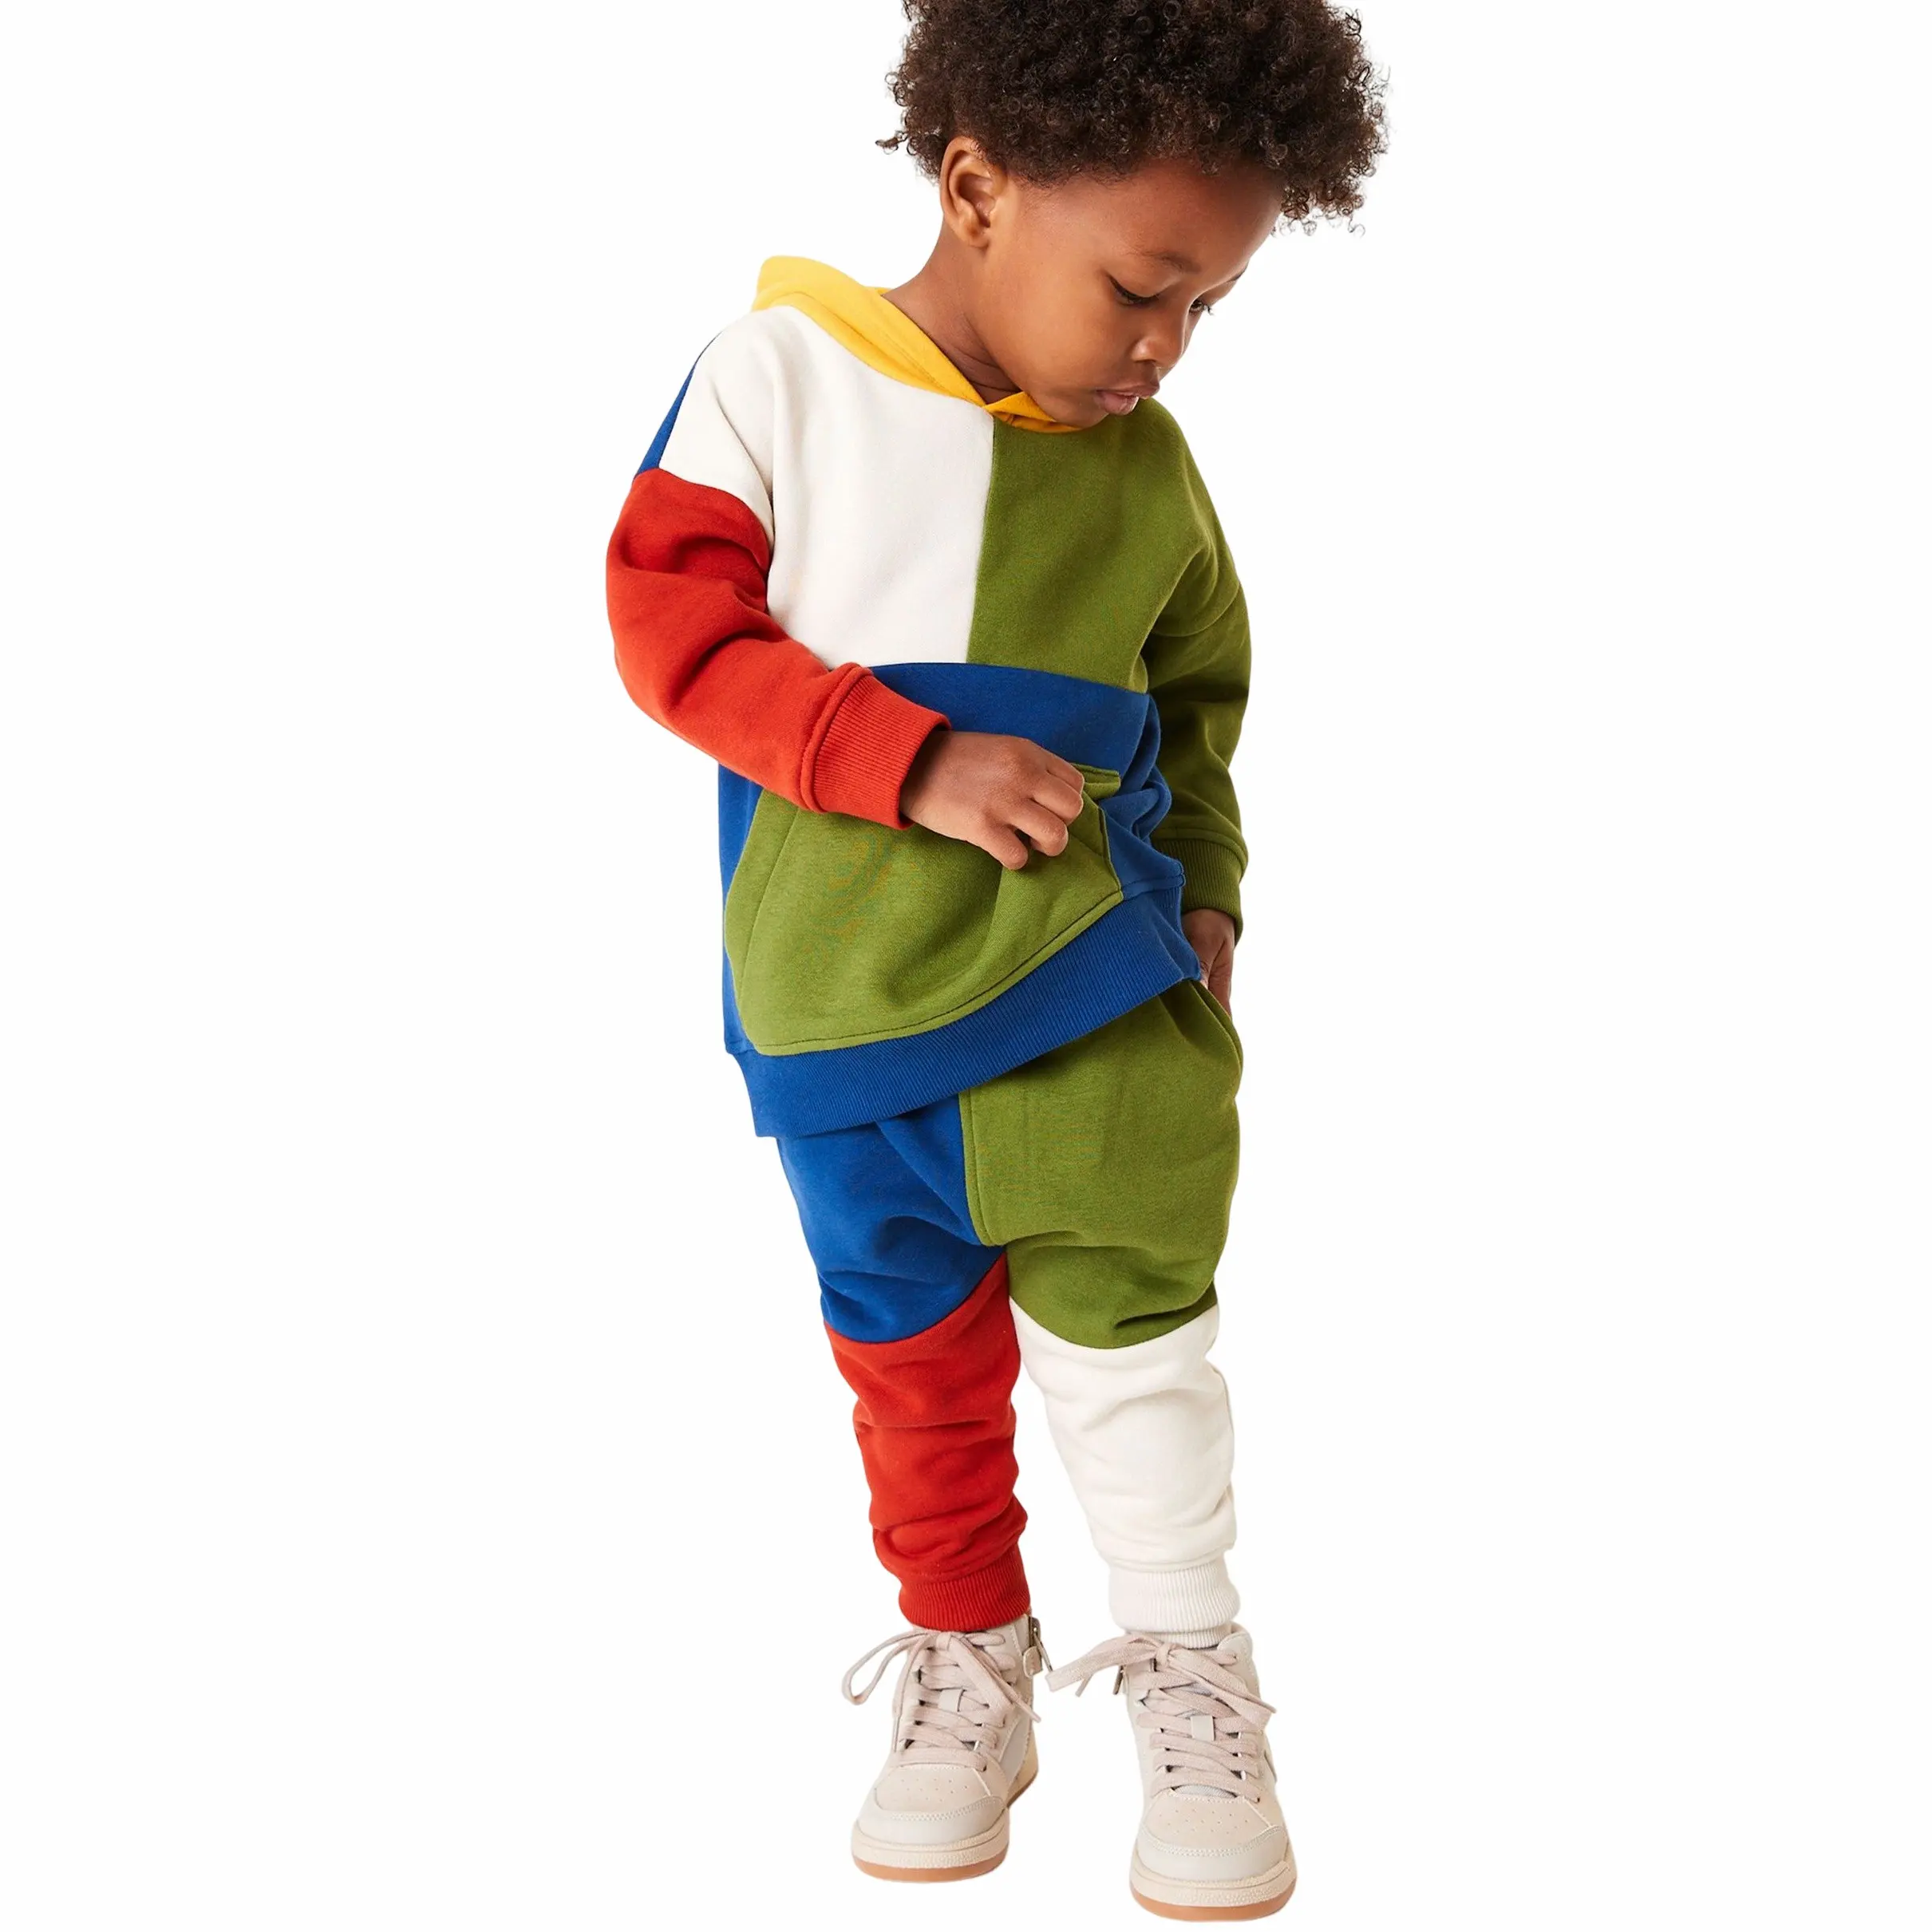 Jungsets Kleidung Kids Outfit-Set Farbblock Eigenmarke Baby-Jungen-Sets Kleidung Kinder Herbstkleidung Kinder Designerkleidung